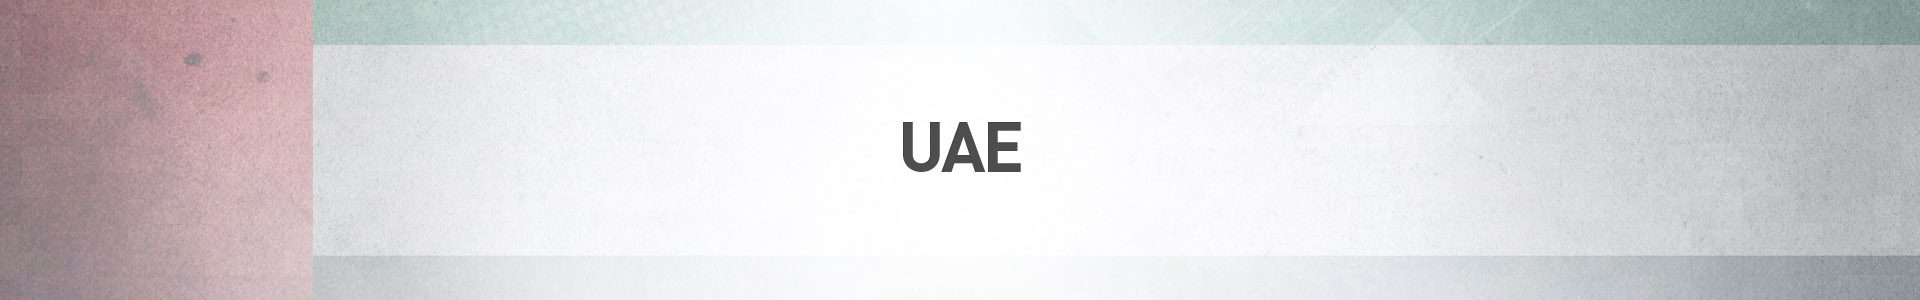 Topo-Pais-UAE-SBA